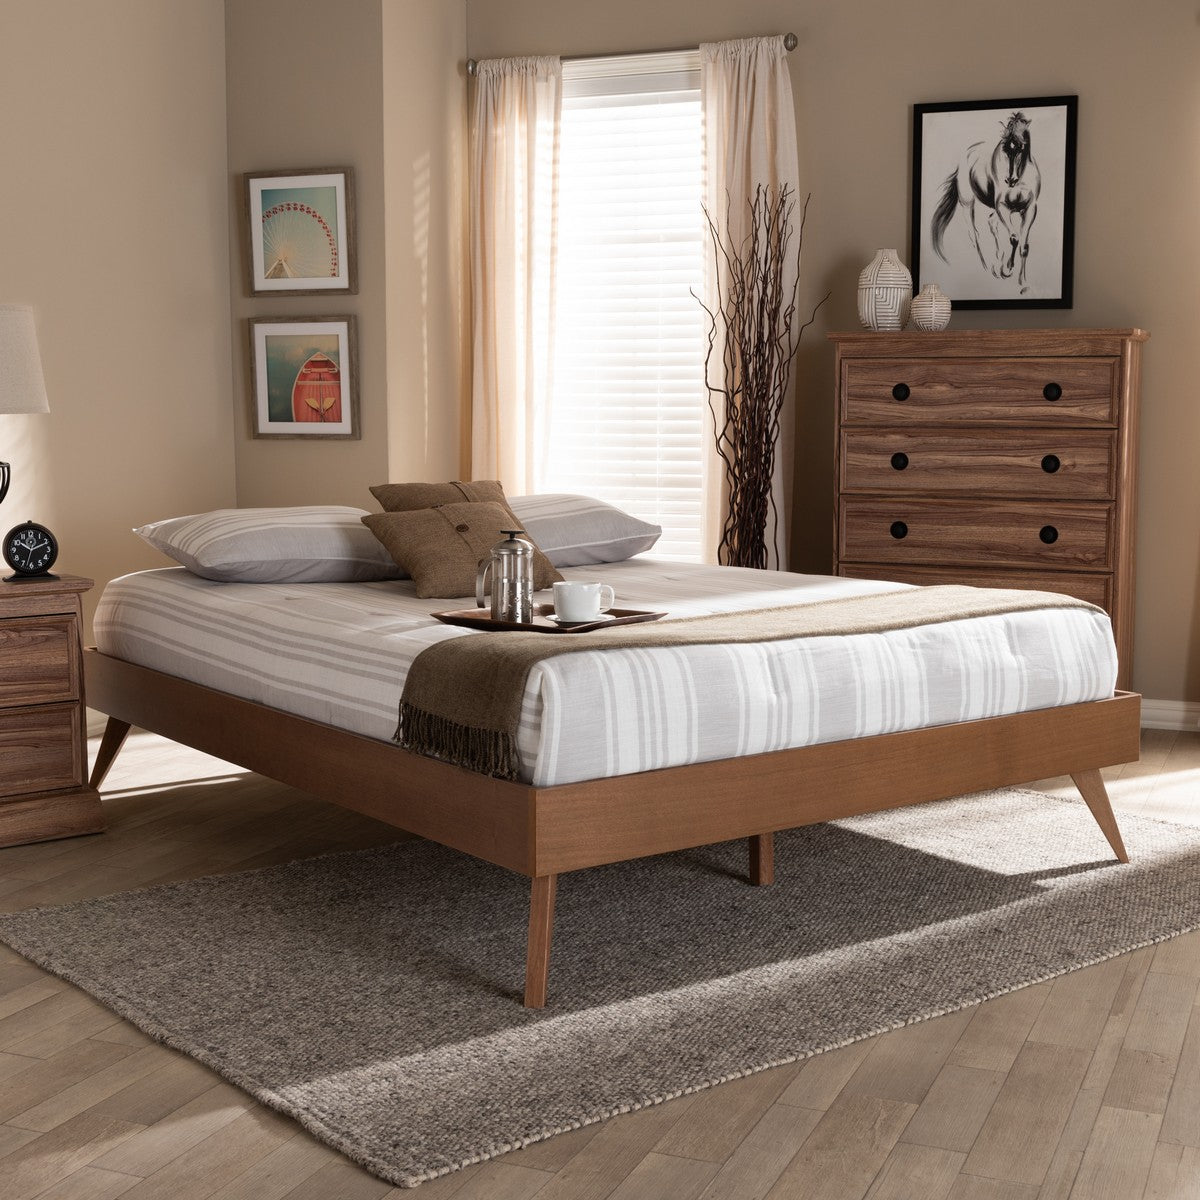 Baxton Studio Lissette Mid-Century Modern Walnut Brown Finished Wood Queen Size Platform Bed Frame